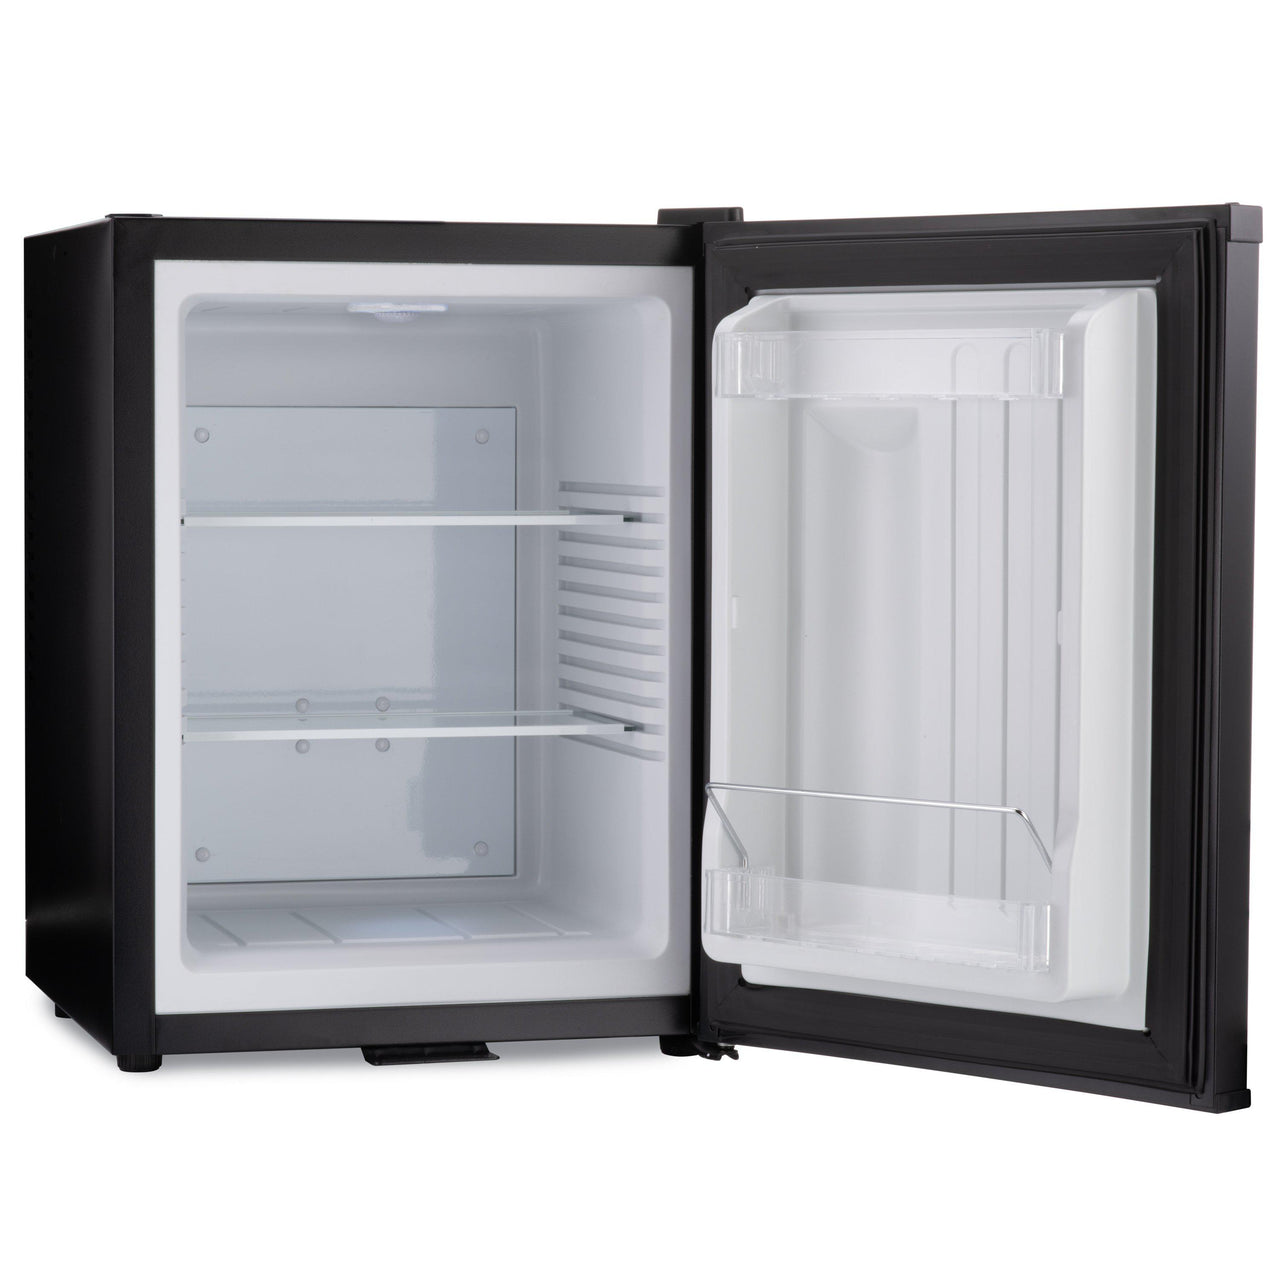 Mini bar fridge 40 litre interior